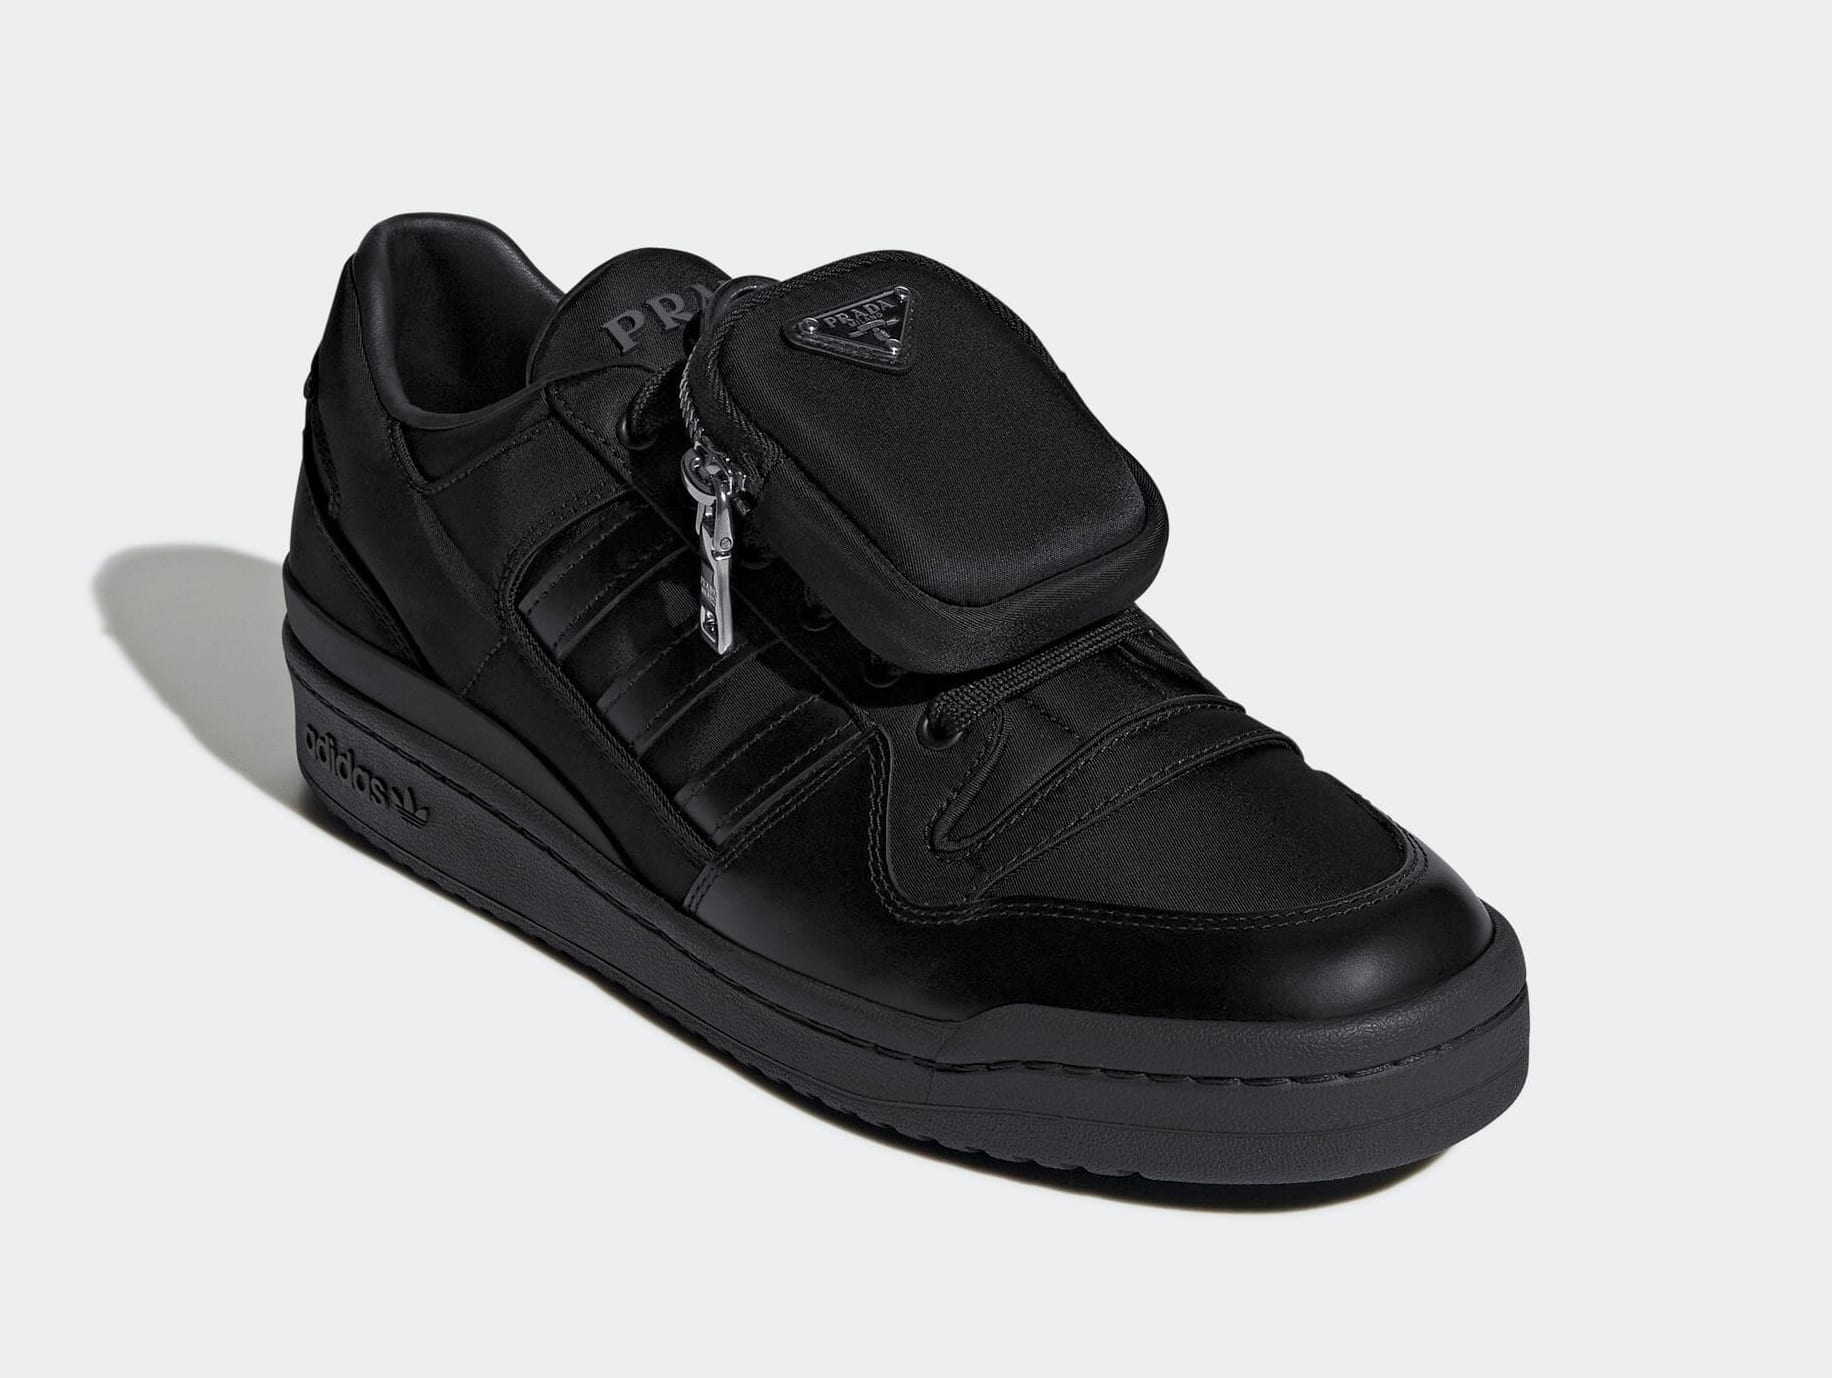 Prada x Adidas Forum Low 'Black' GY7043 Front